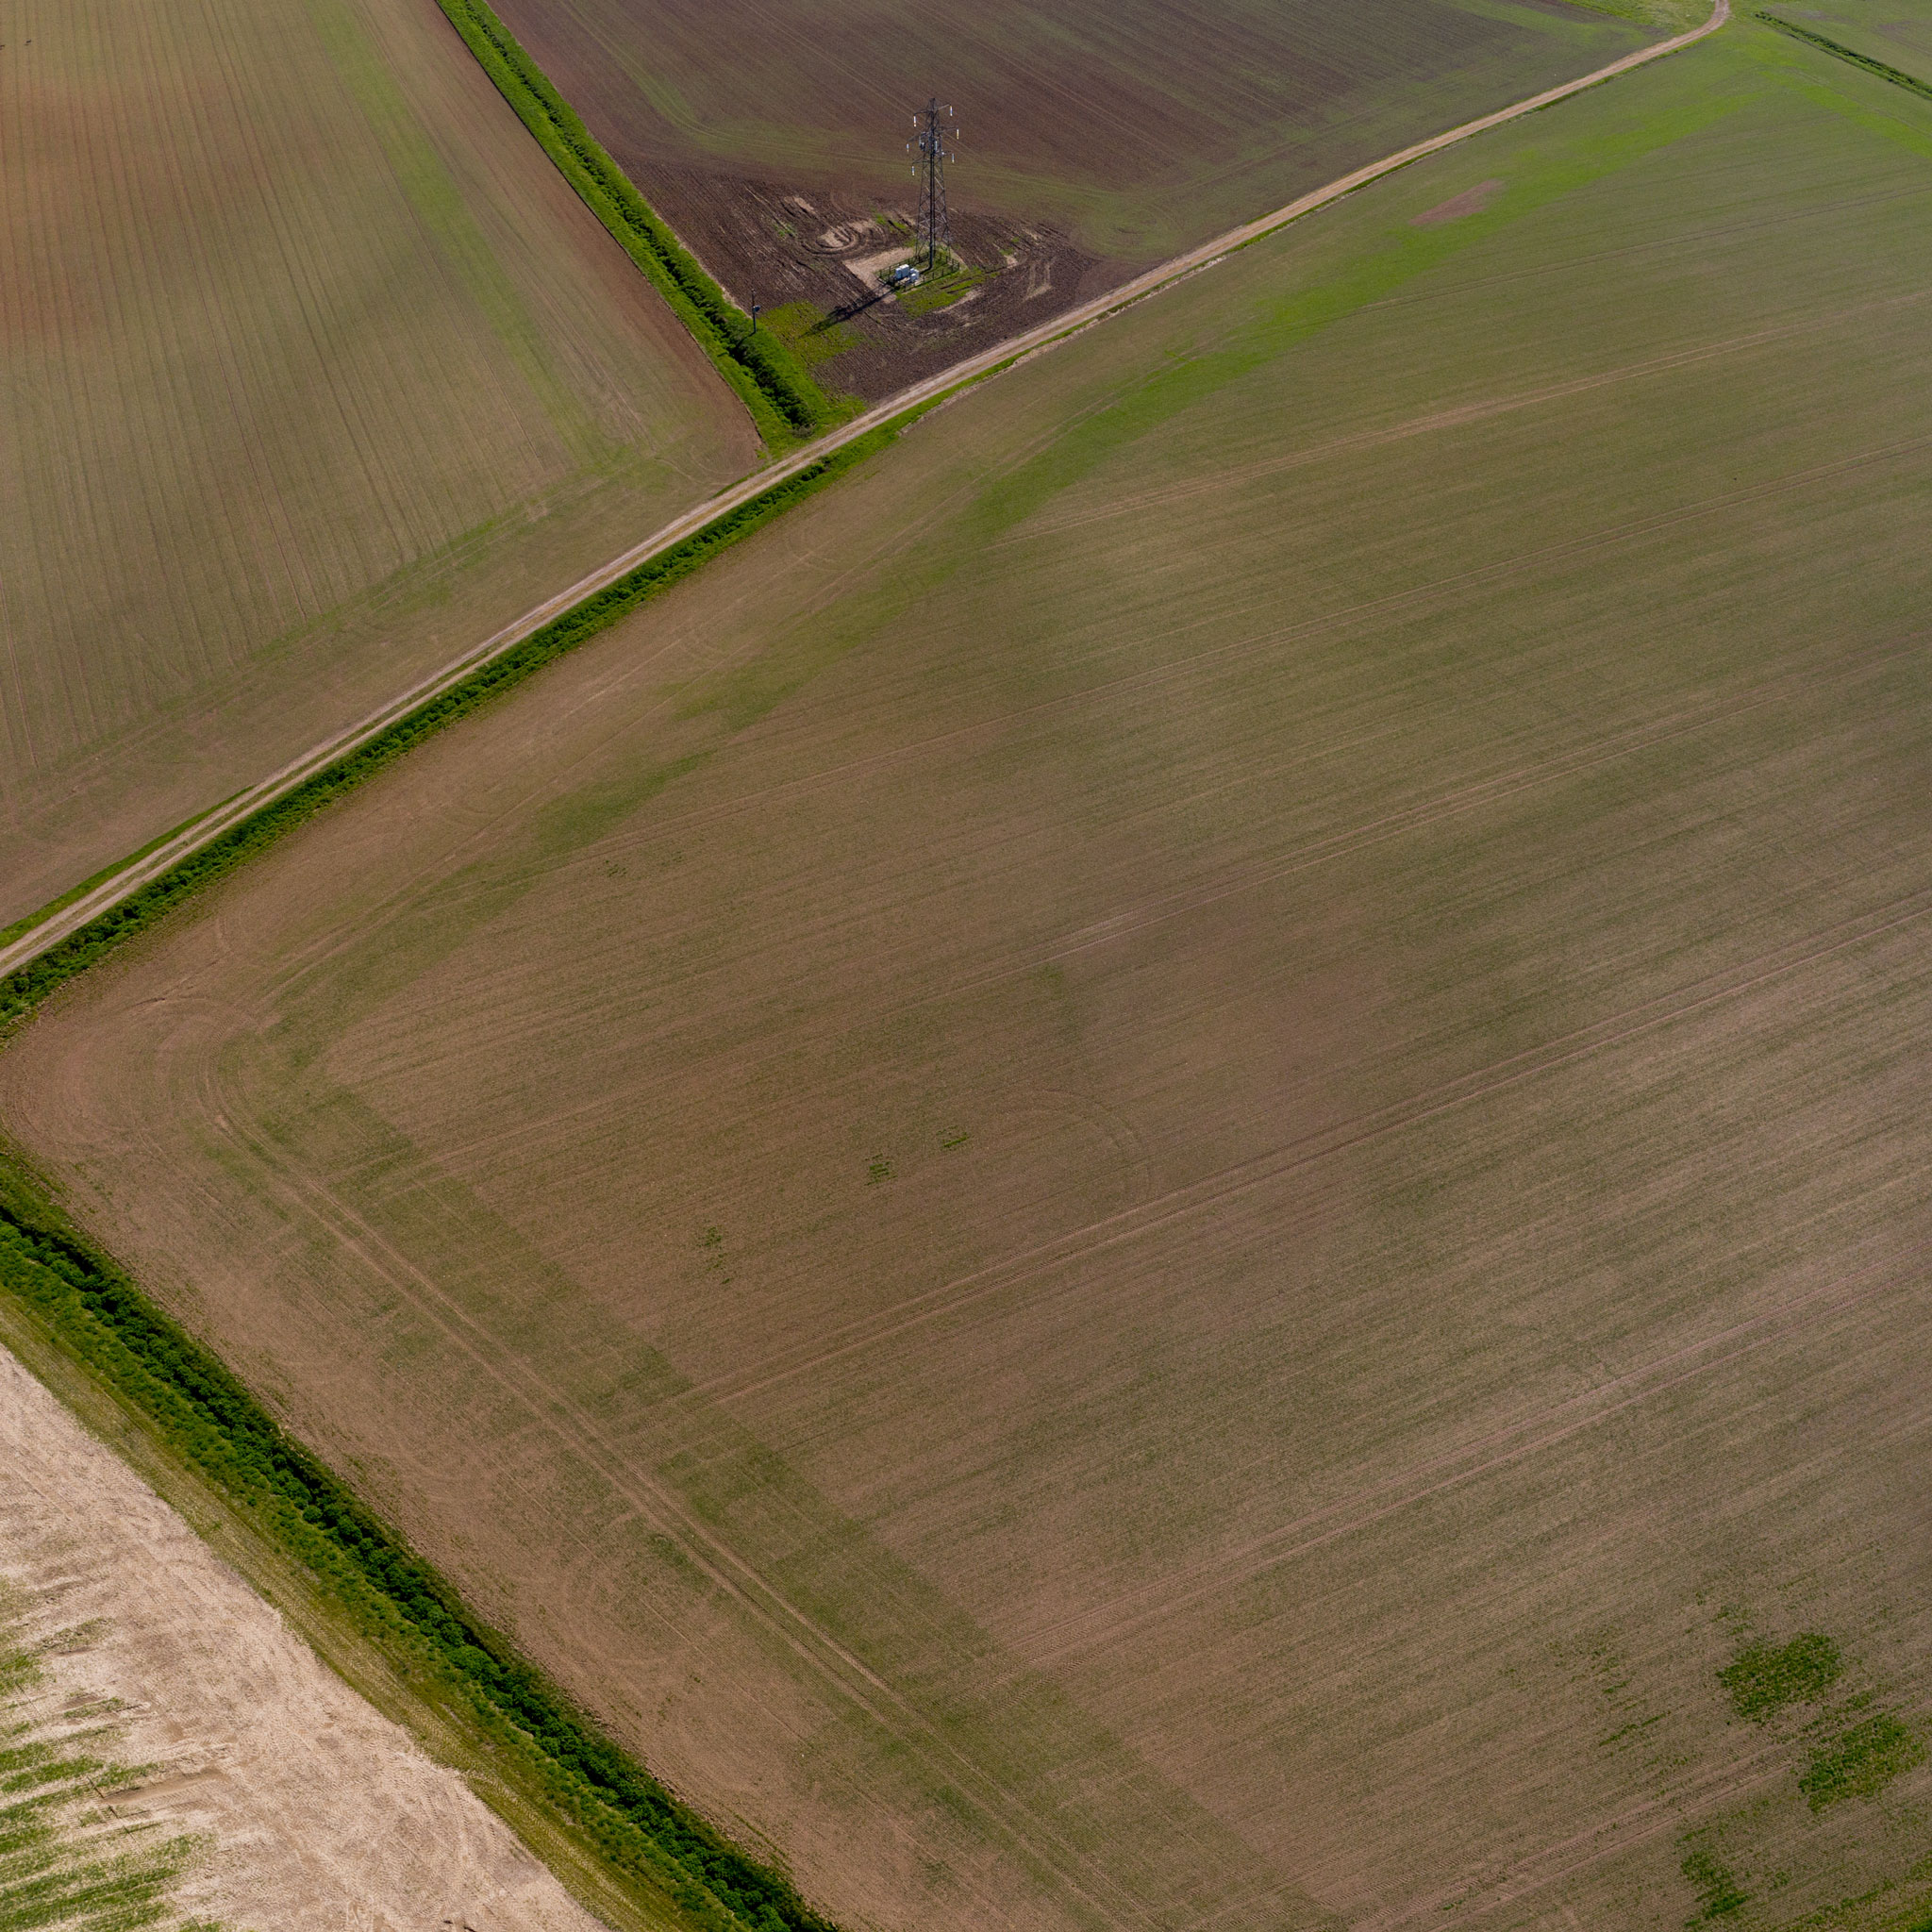 Agricultural land, Winnersh, Berkshire.